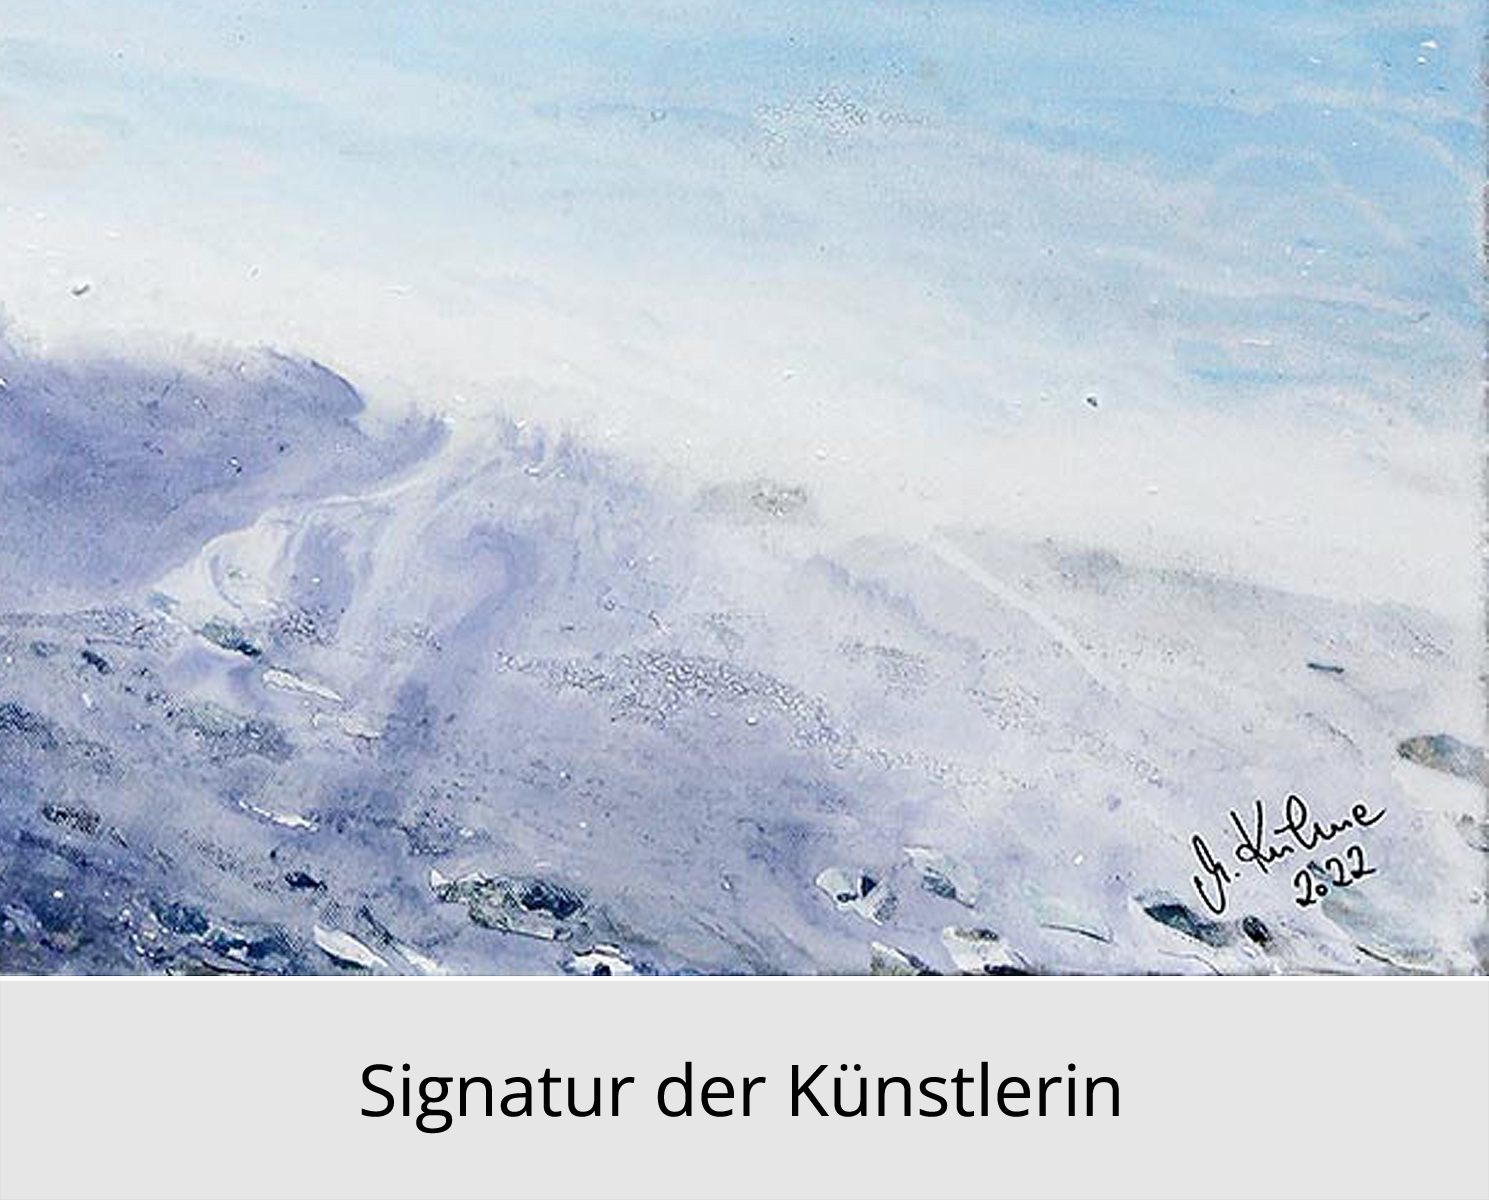 M. Kühne: "Vor dem Sturm", Edition, signierter Kunstdruck